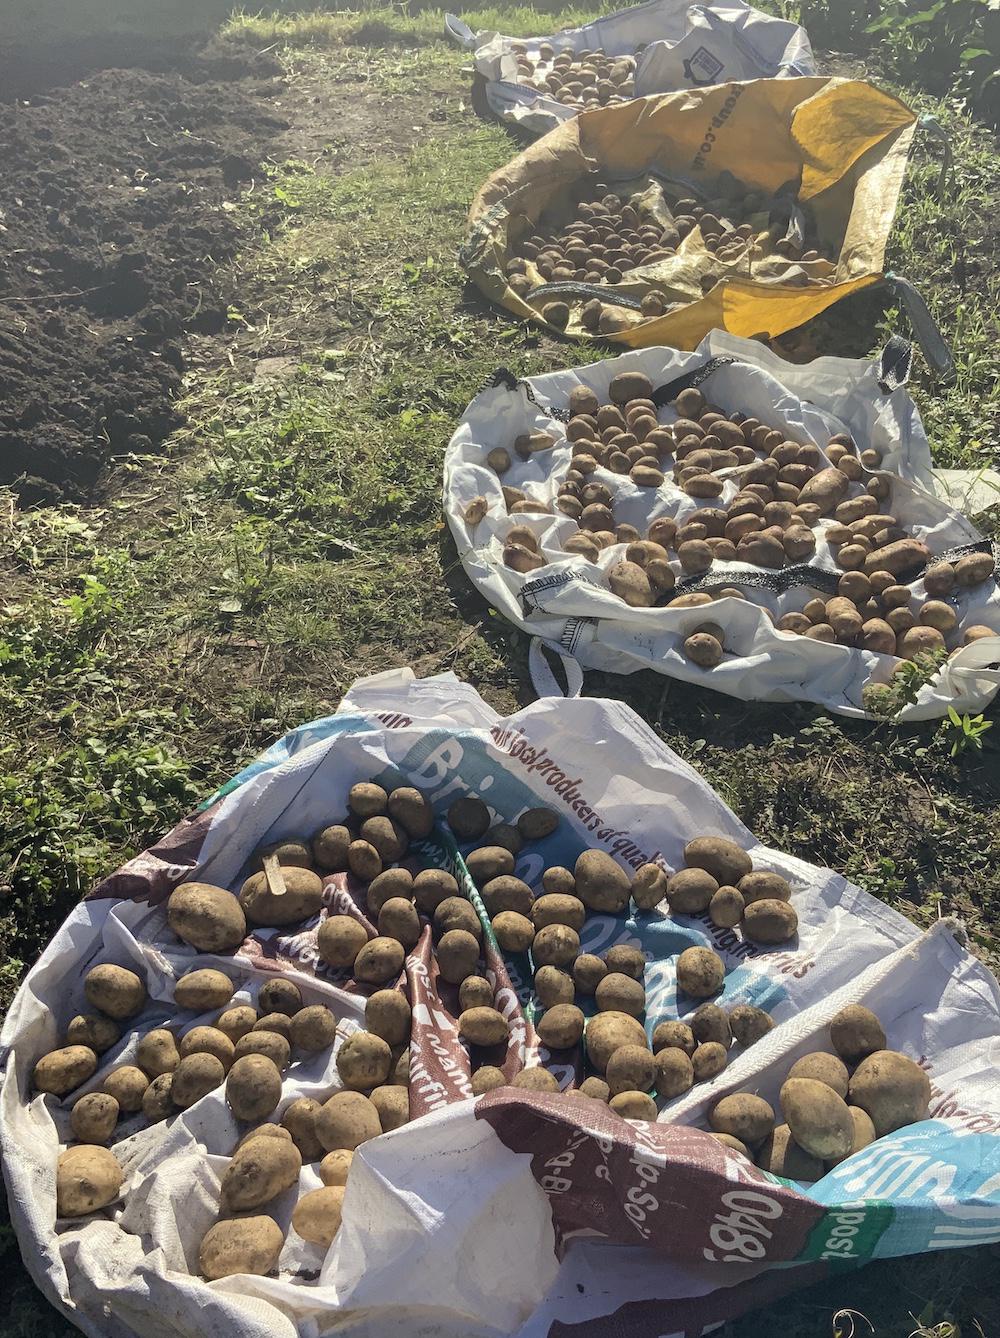 A photo of dozens of freshly dug potatoes